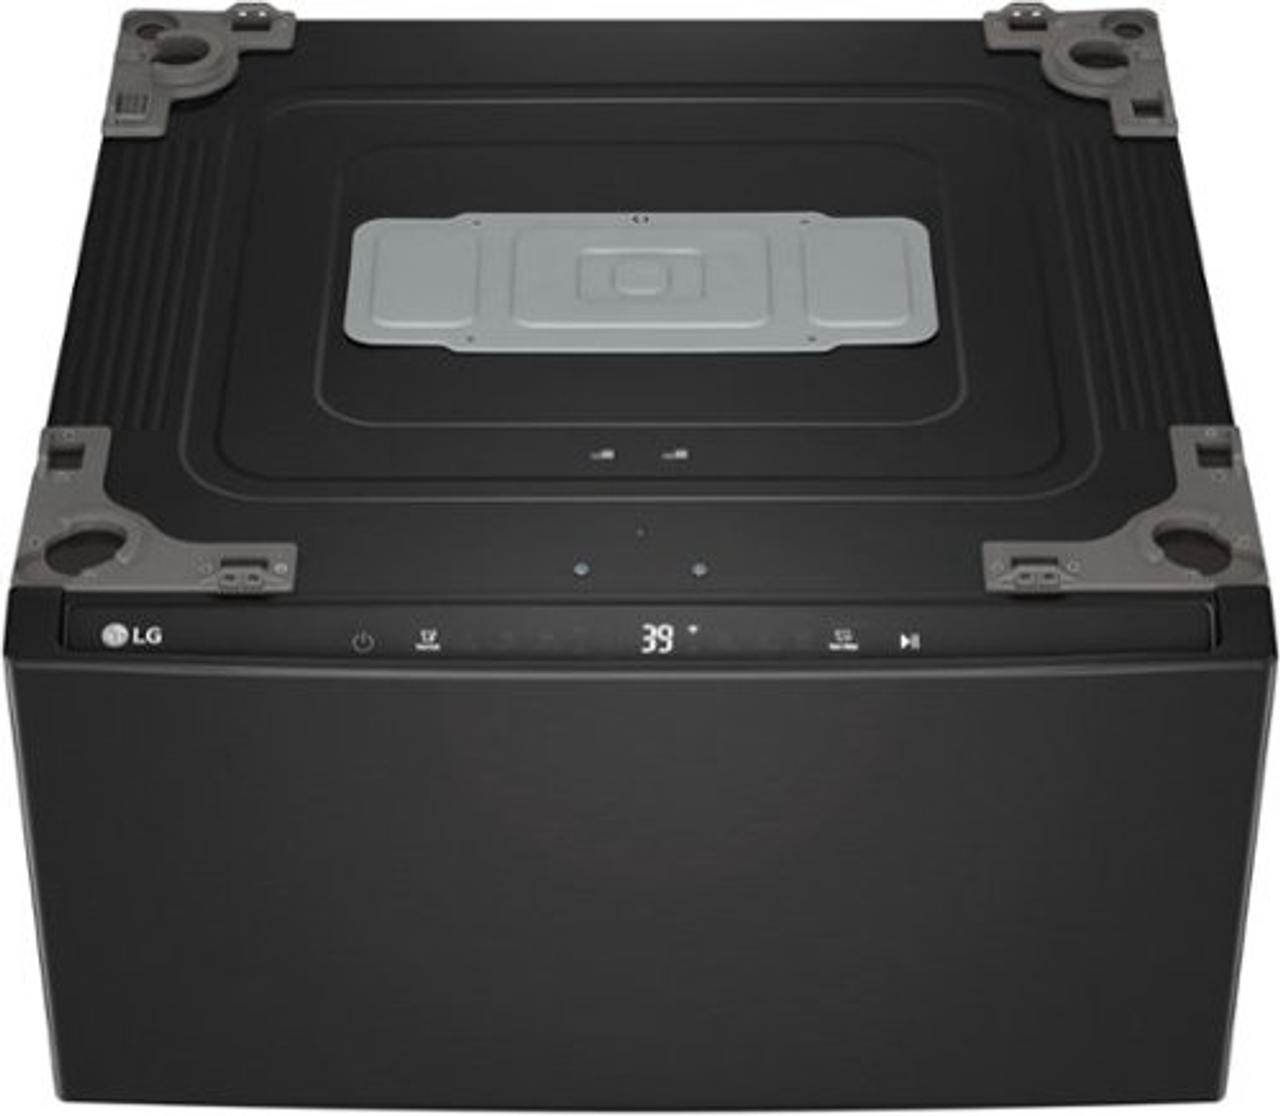 LG - SideKick 1.0 Cu. Ft. High-Efficiency Smart Top Load Pedestal Washer - Black steel